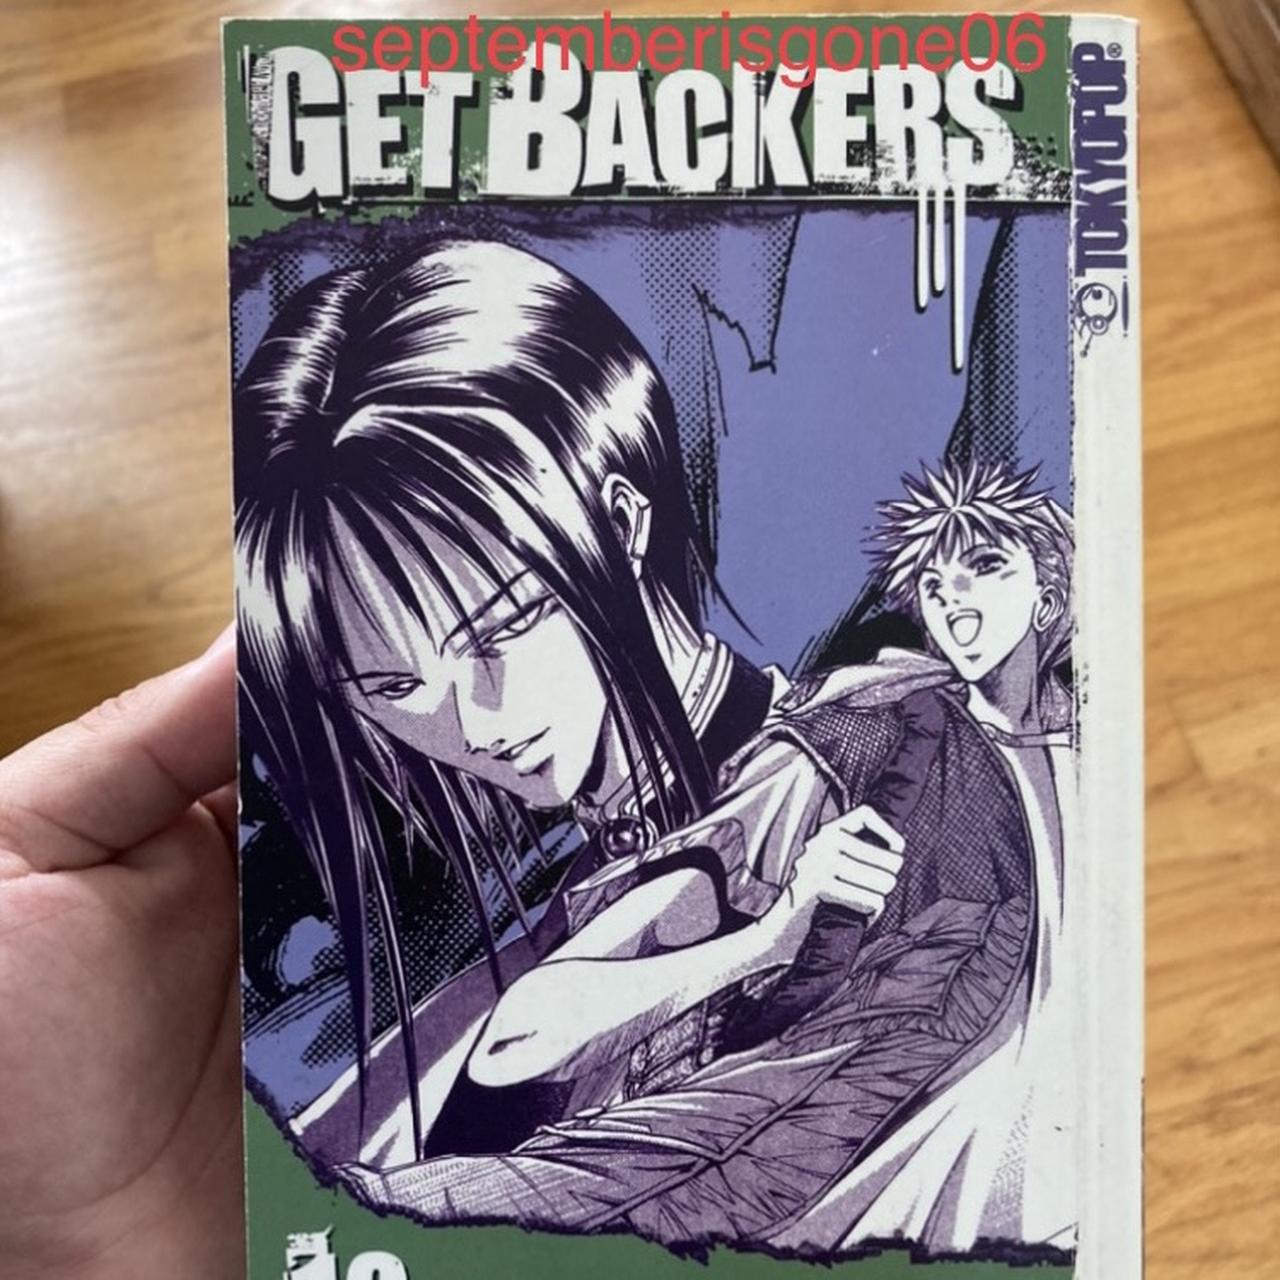 Getbackers, Book 1